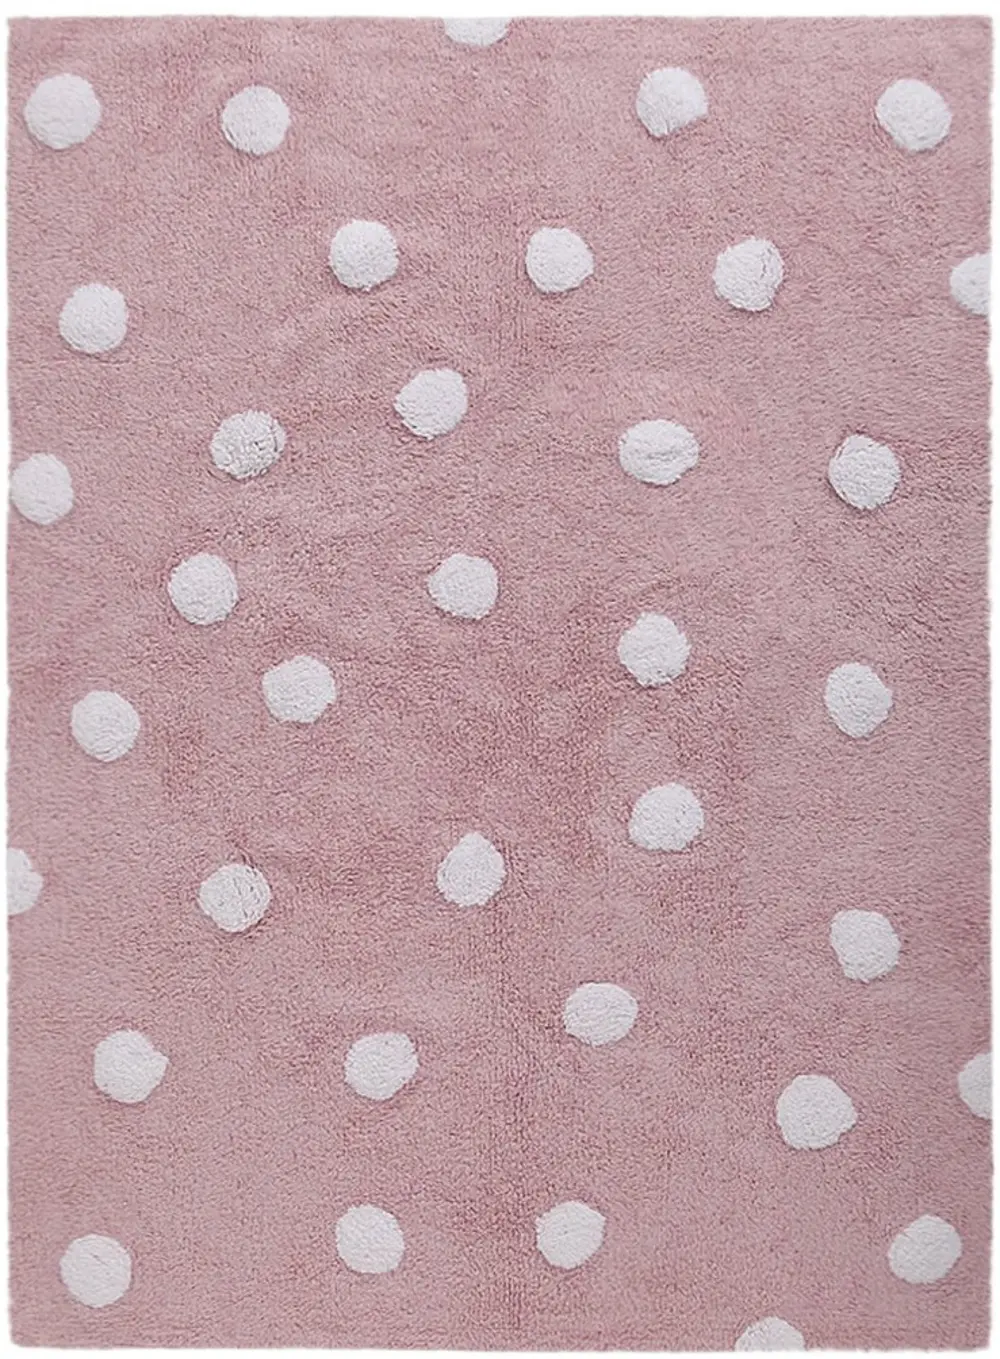 C-00081 4 x 5 Small Pink Polka Dots Washable Rug-1